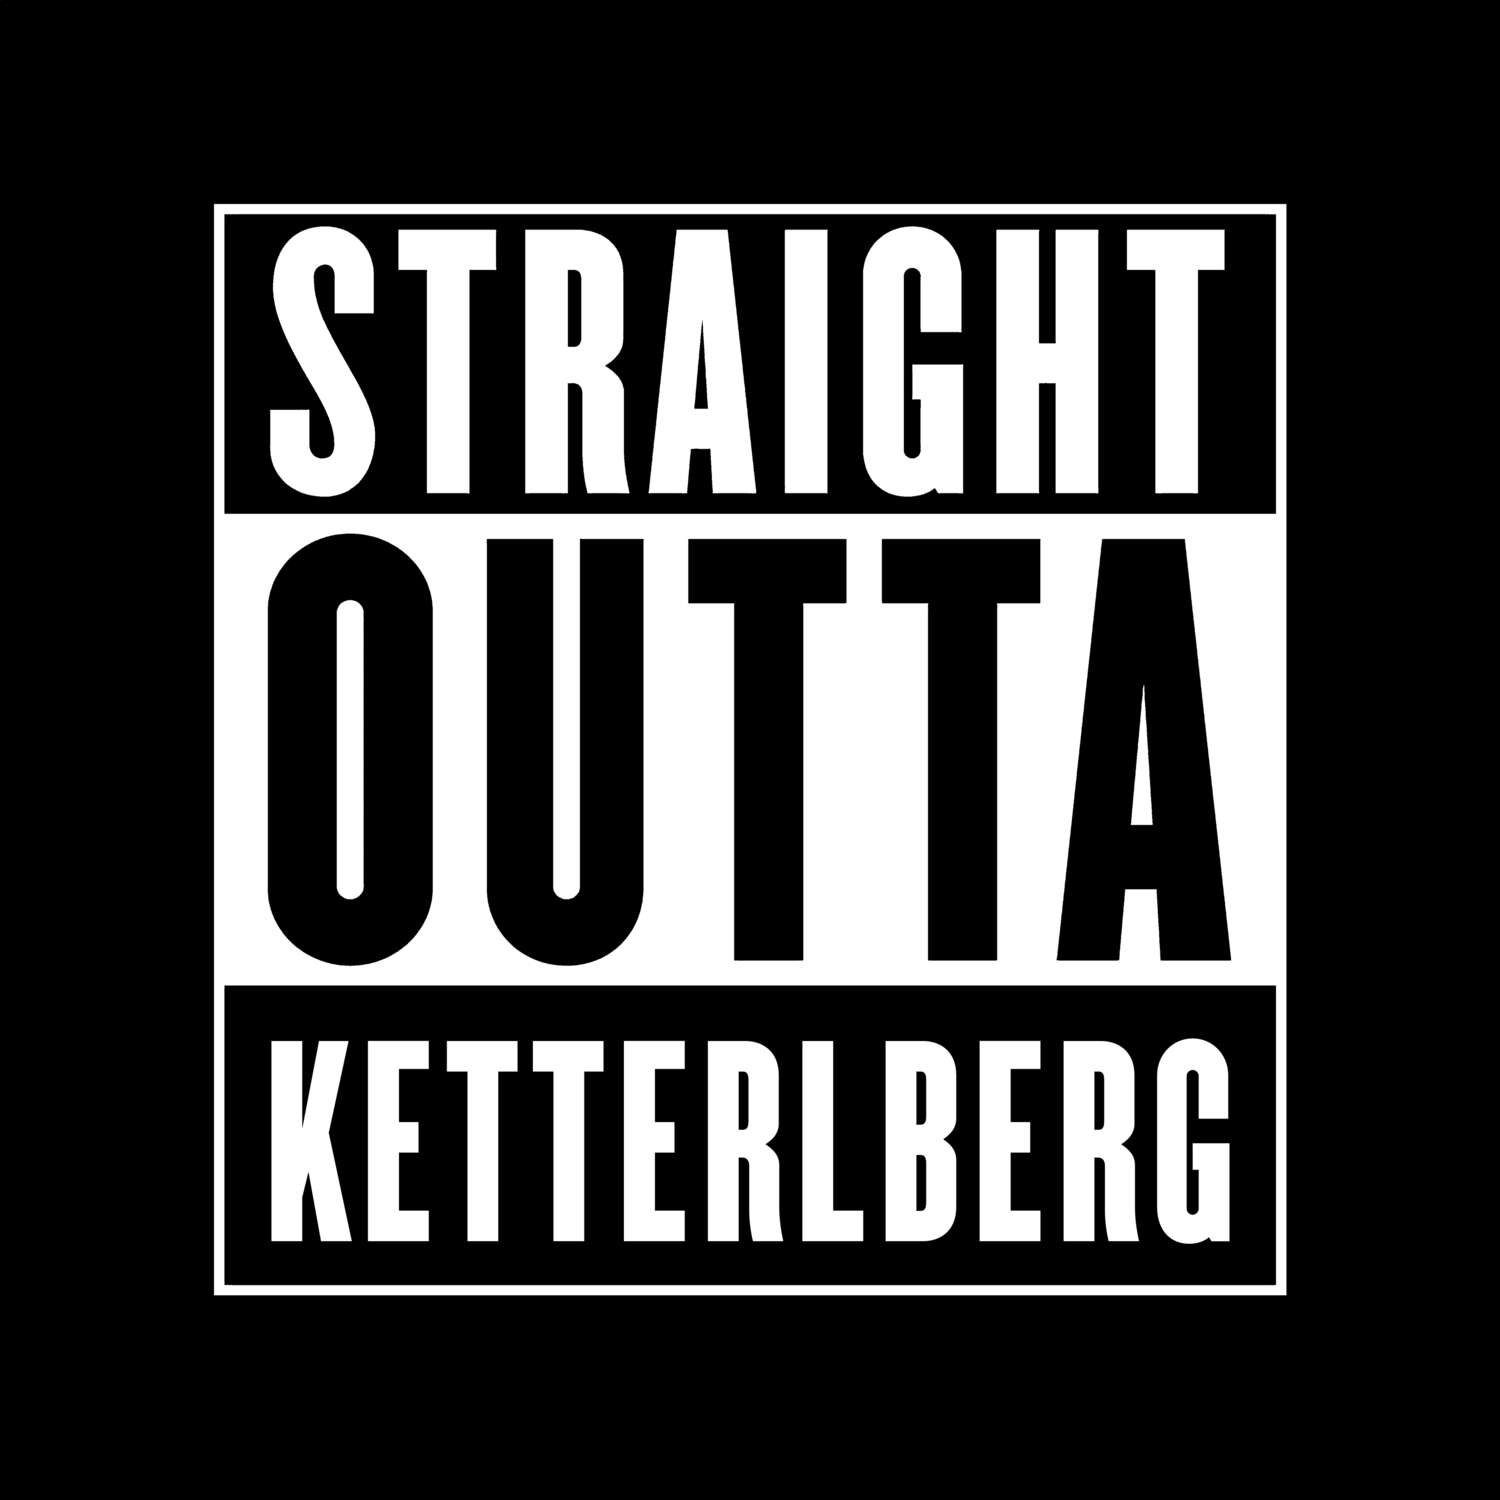 Ketterlberg T-Shirt »Straight Outta«